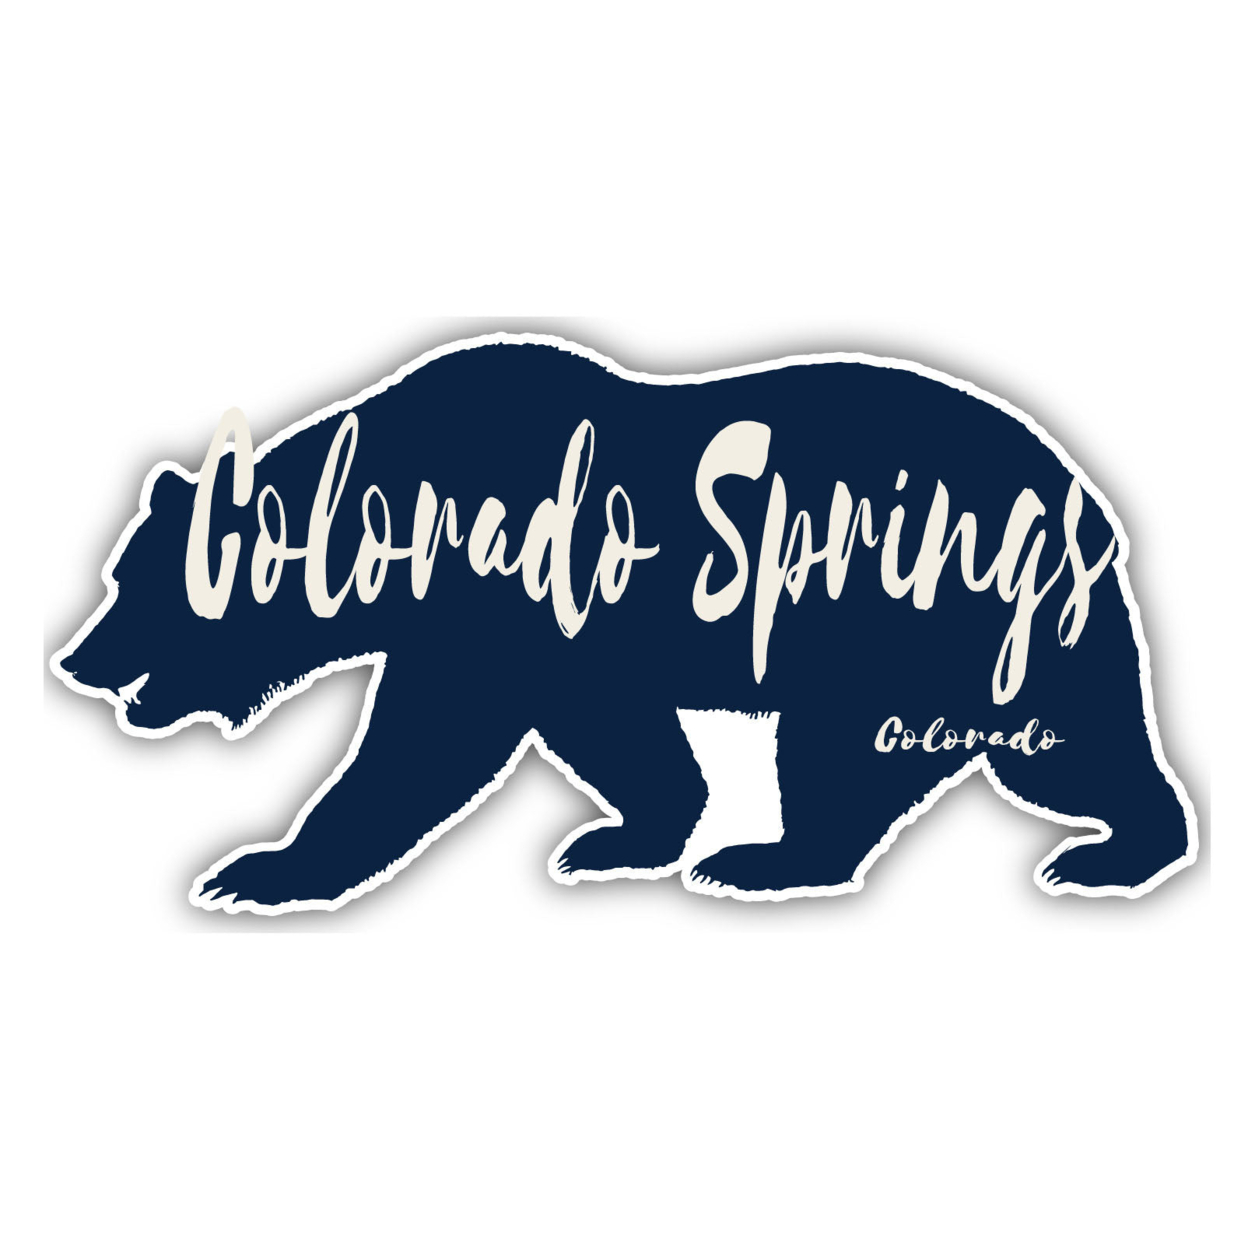 Colorado Springs Colorado Souvenir Decorative Stickers (Choose Theme And Size) - 4-Pack, 2-Inch, Tent